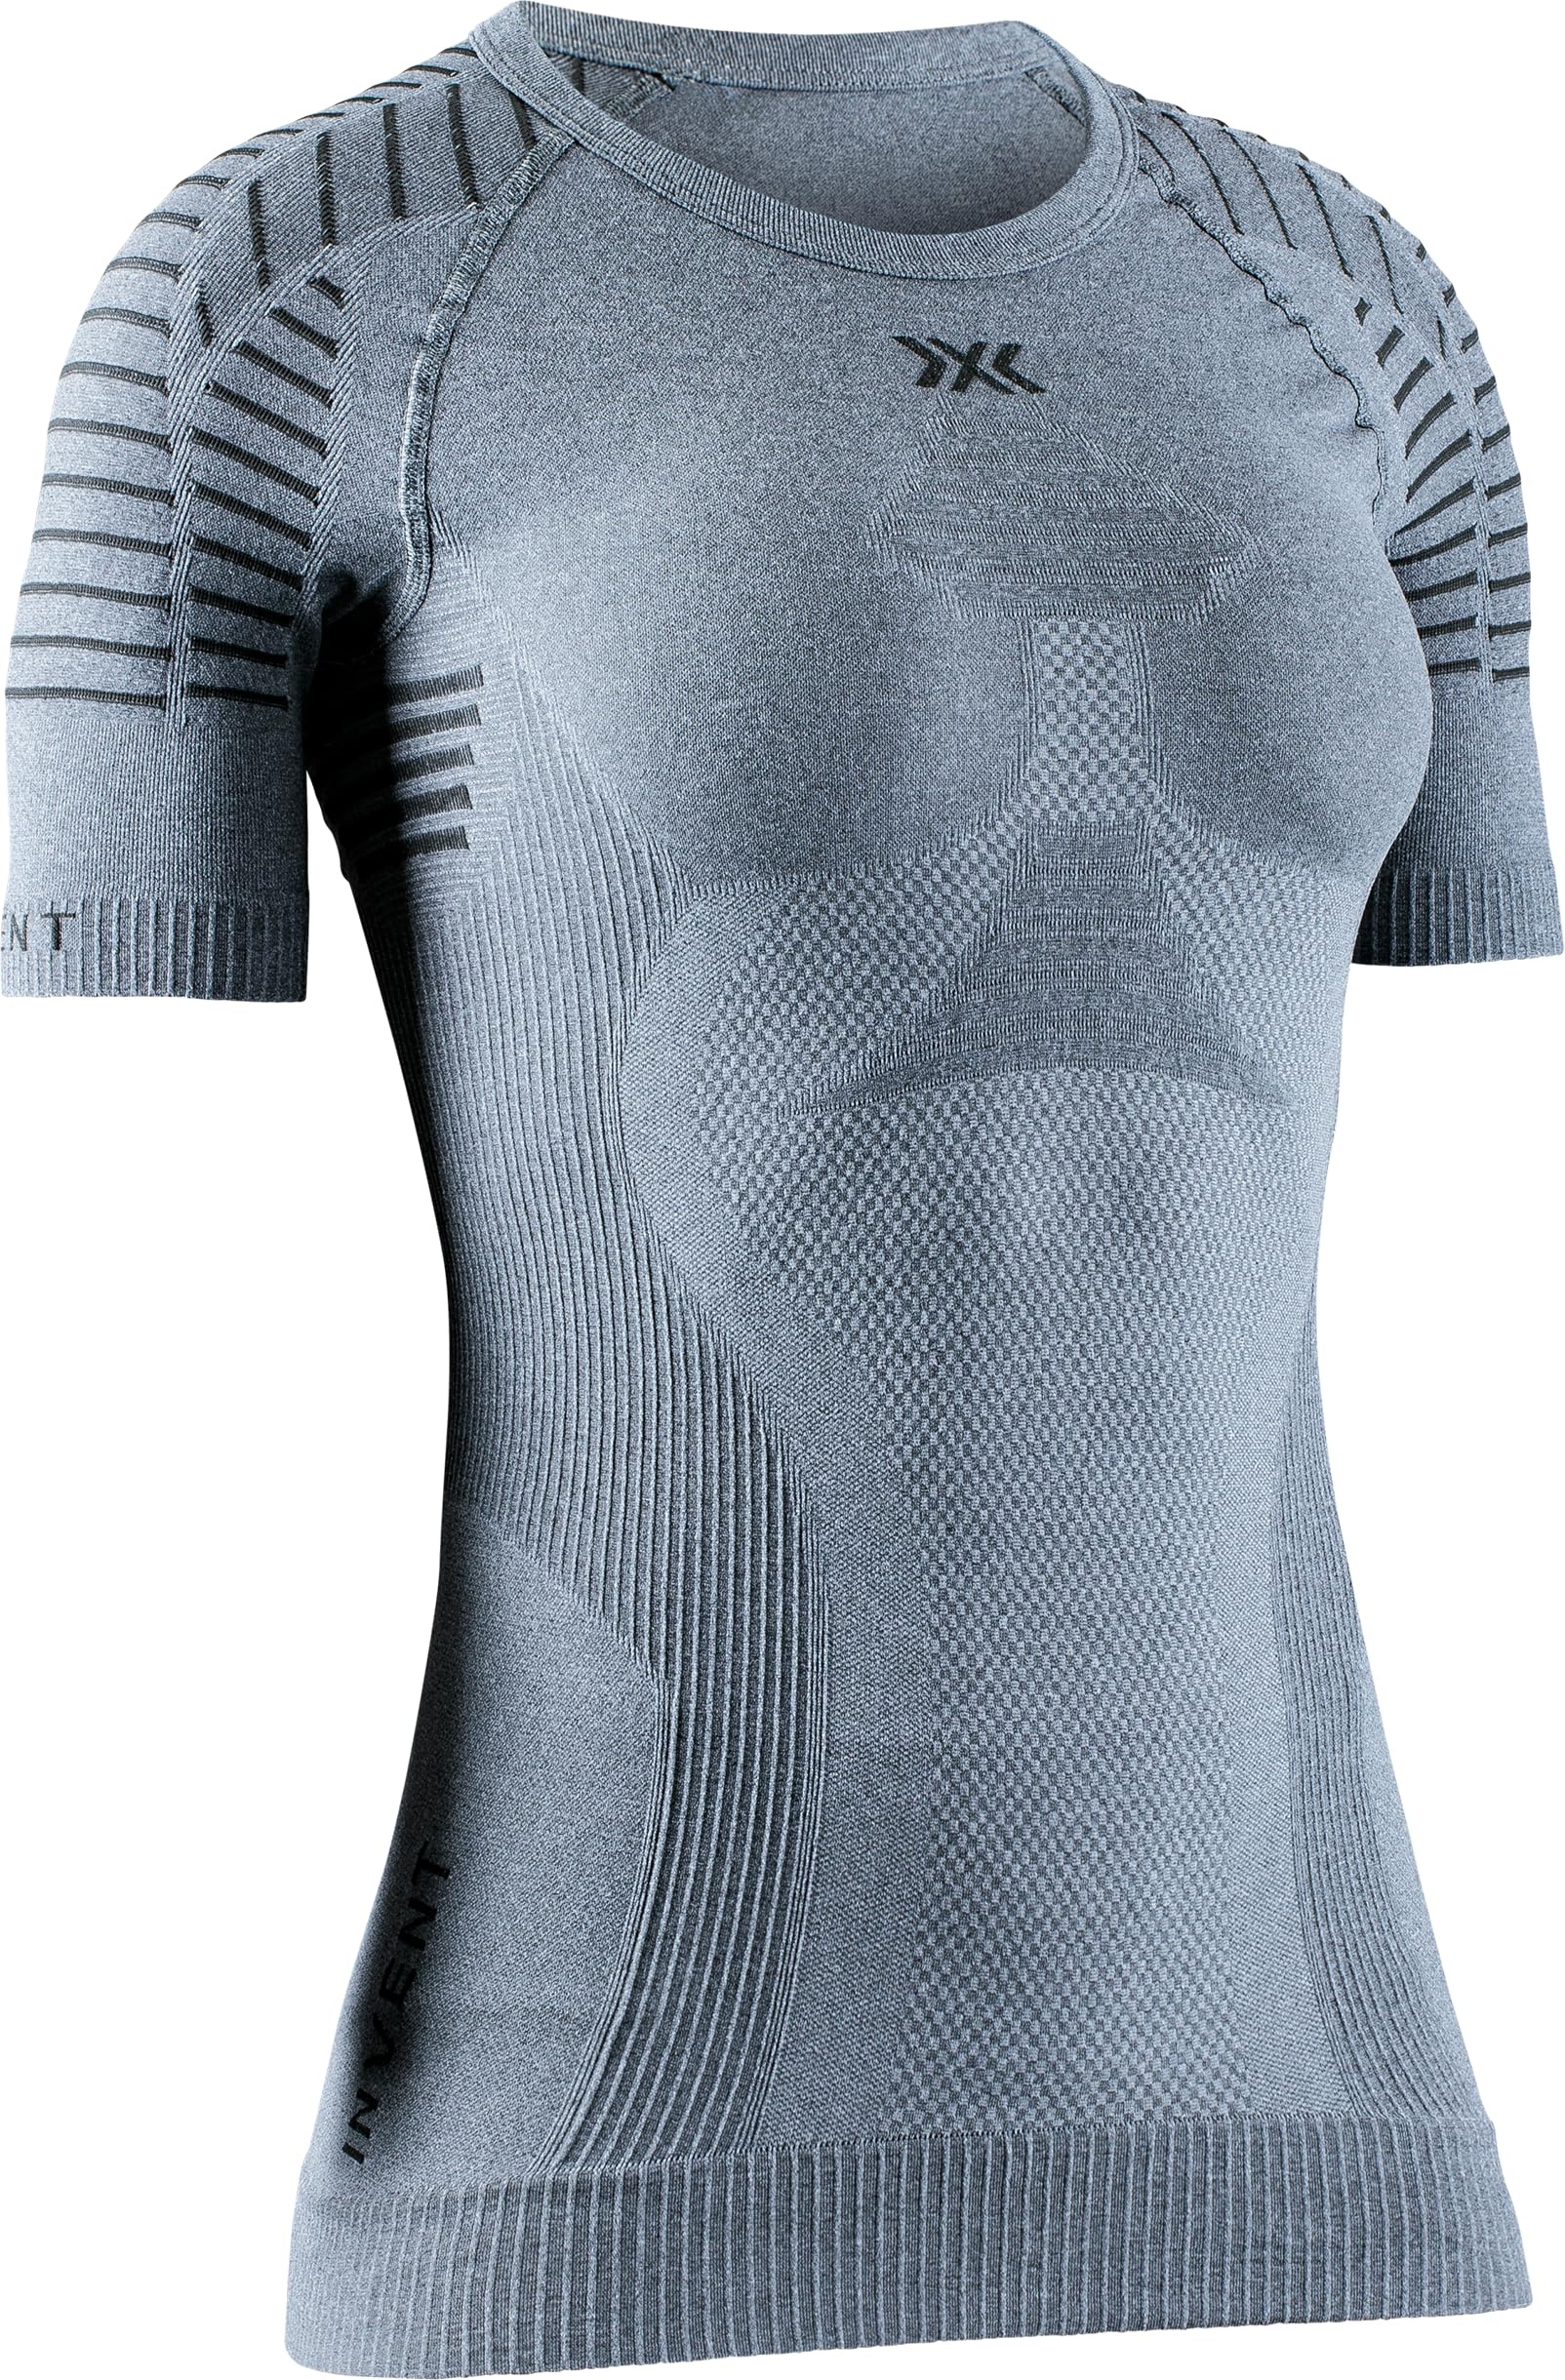 X-Bionic Women's Invent 4.0 Light Shirt Short Sleeve Women T, Grey Melange/Anthracite, L